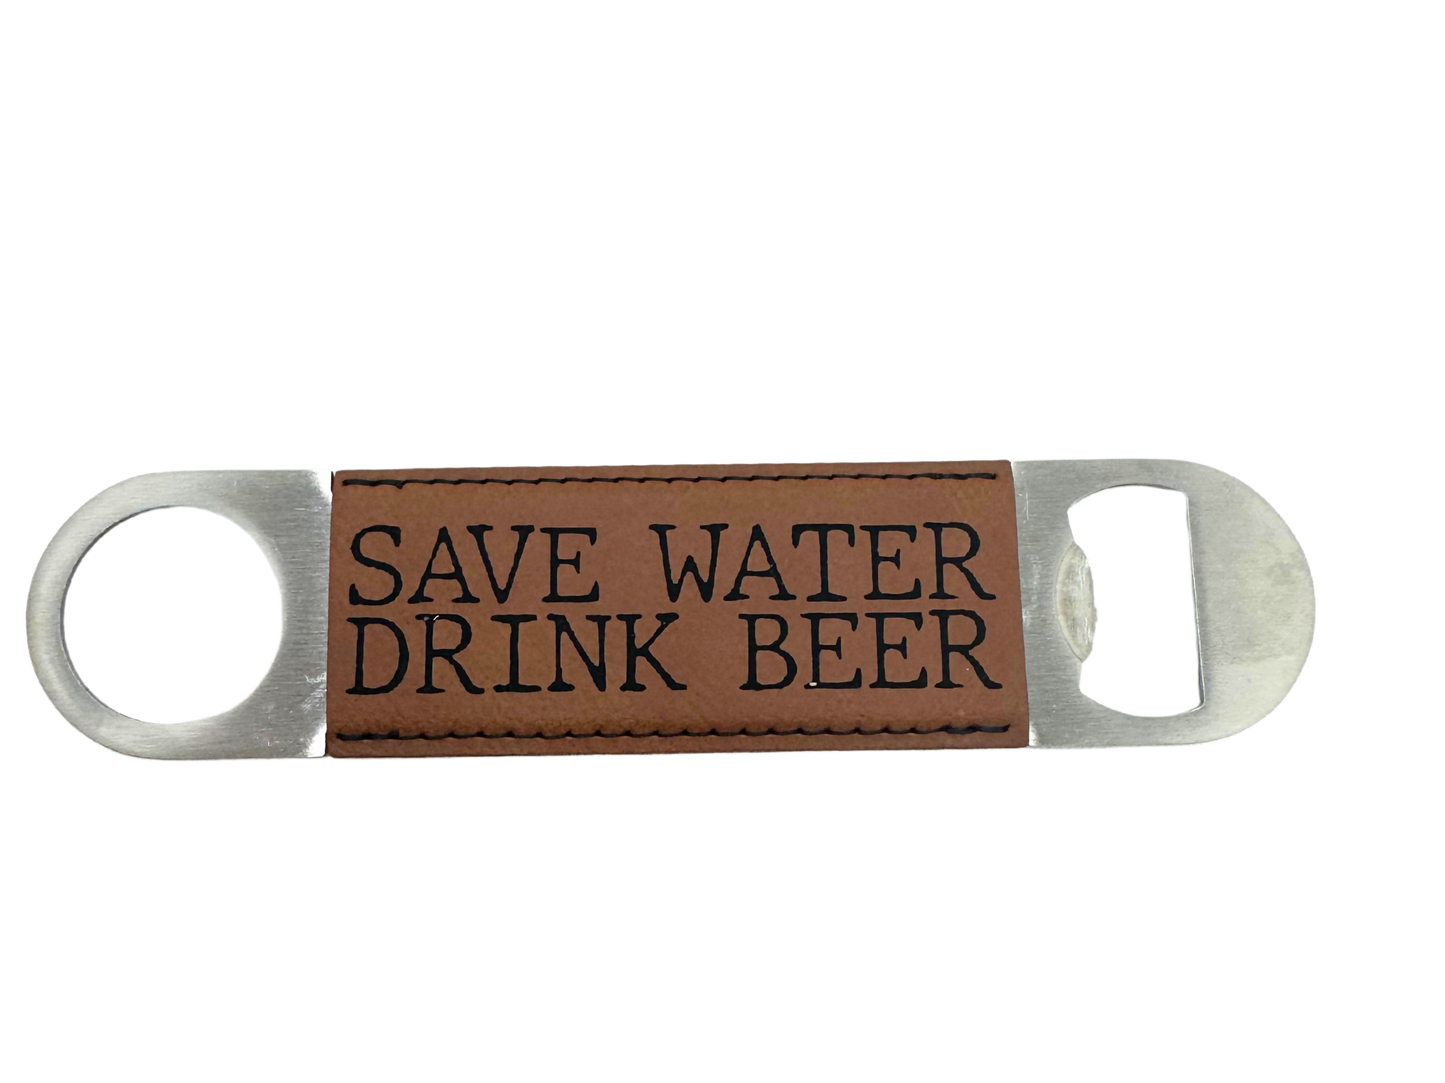 Save water drink beer bottle opener